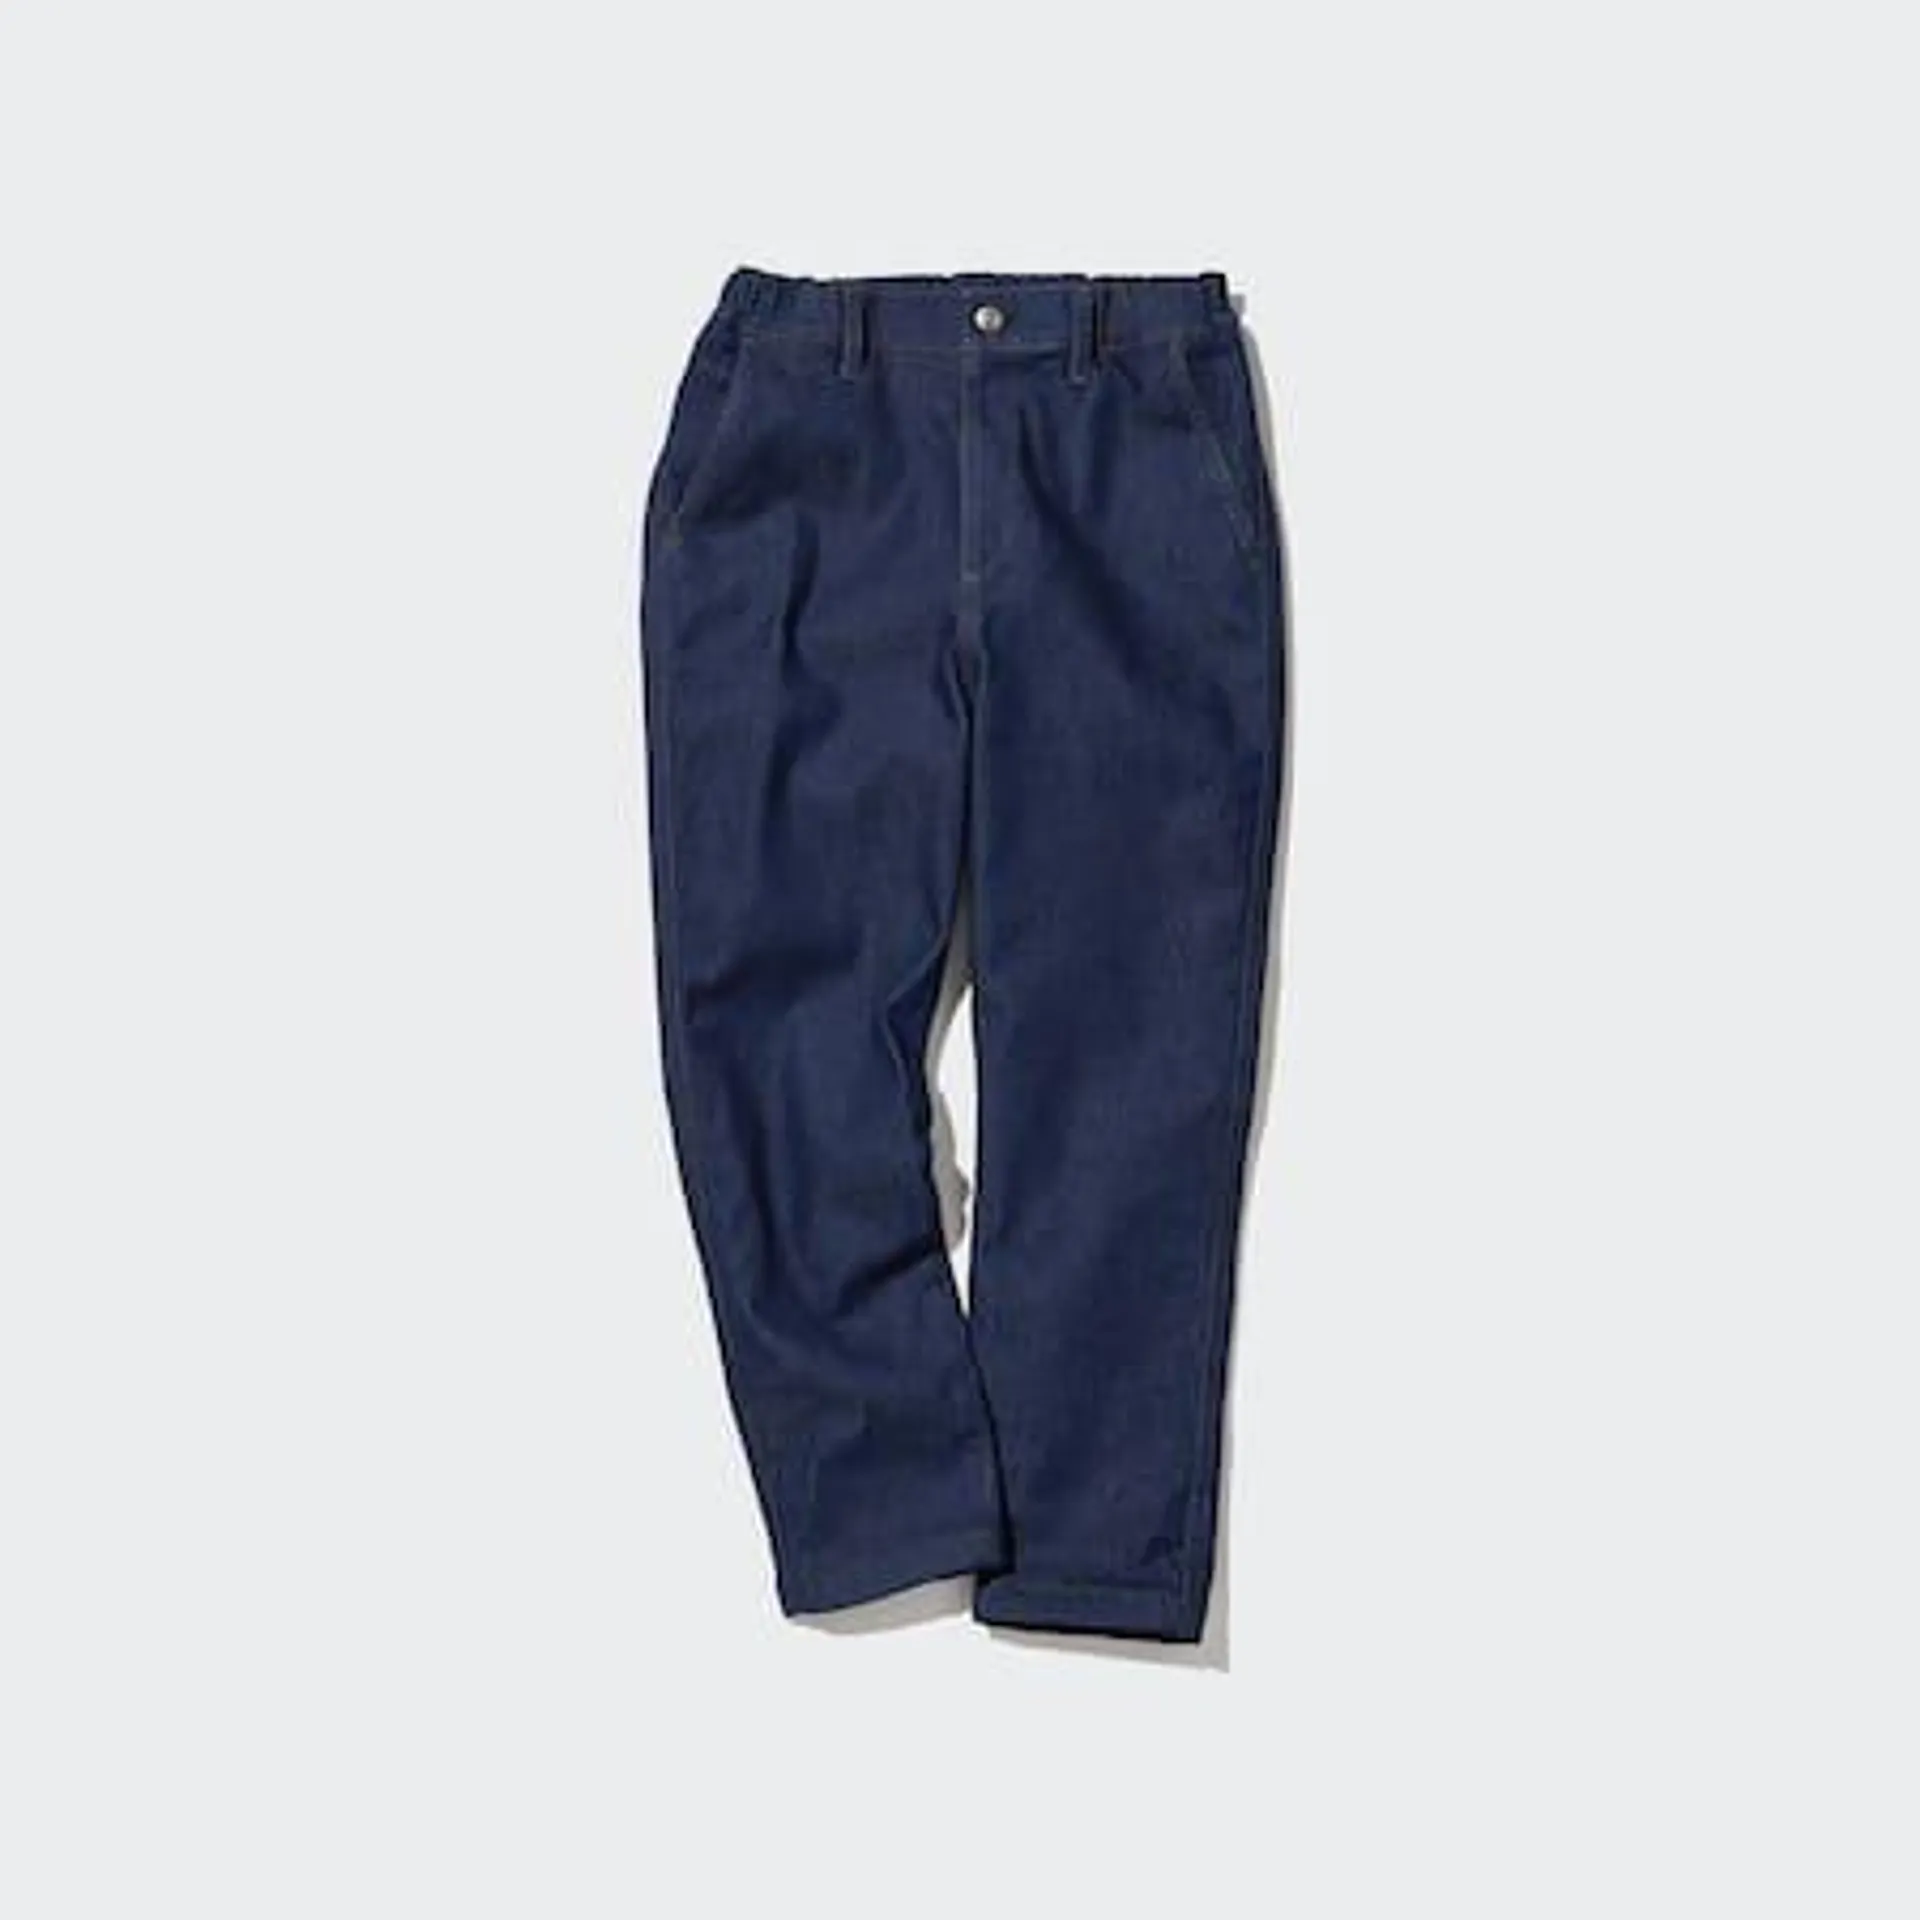 Kids Warm Stretch Lined Jeans